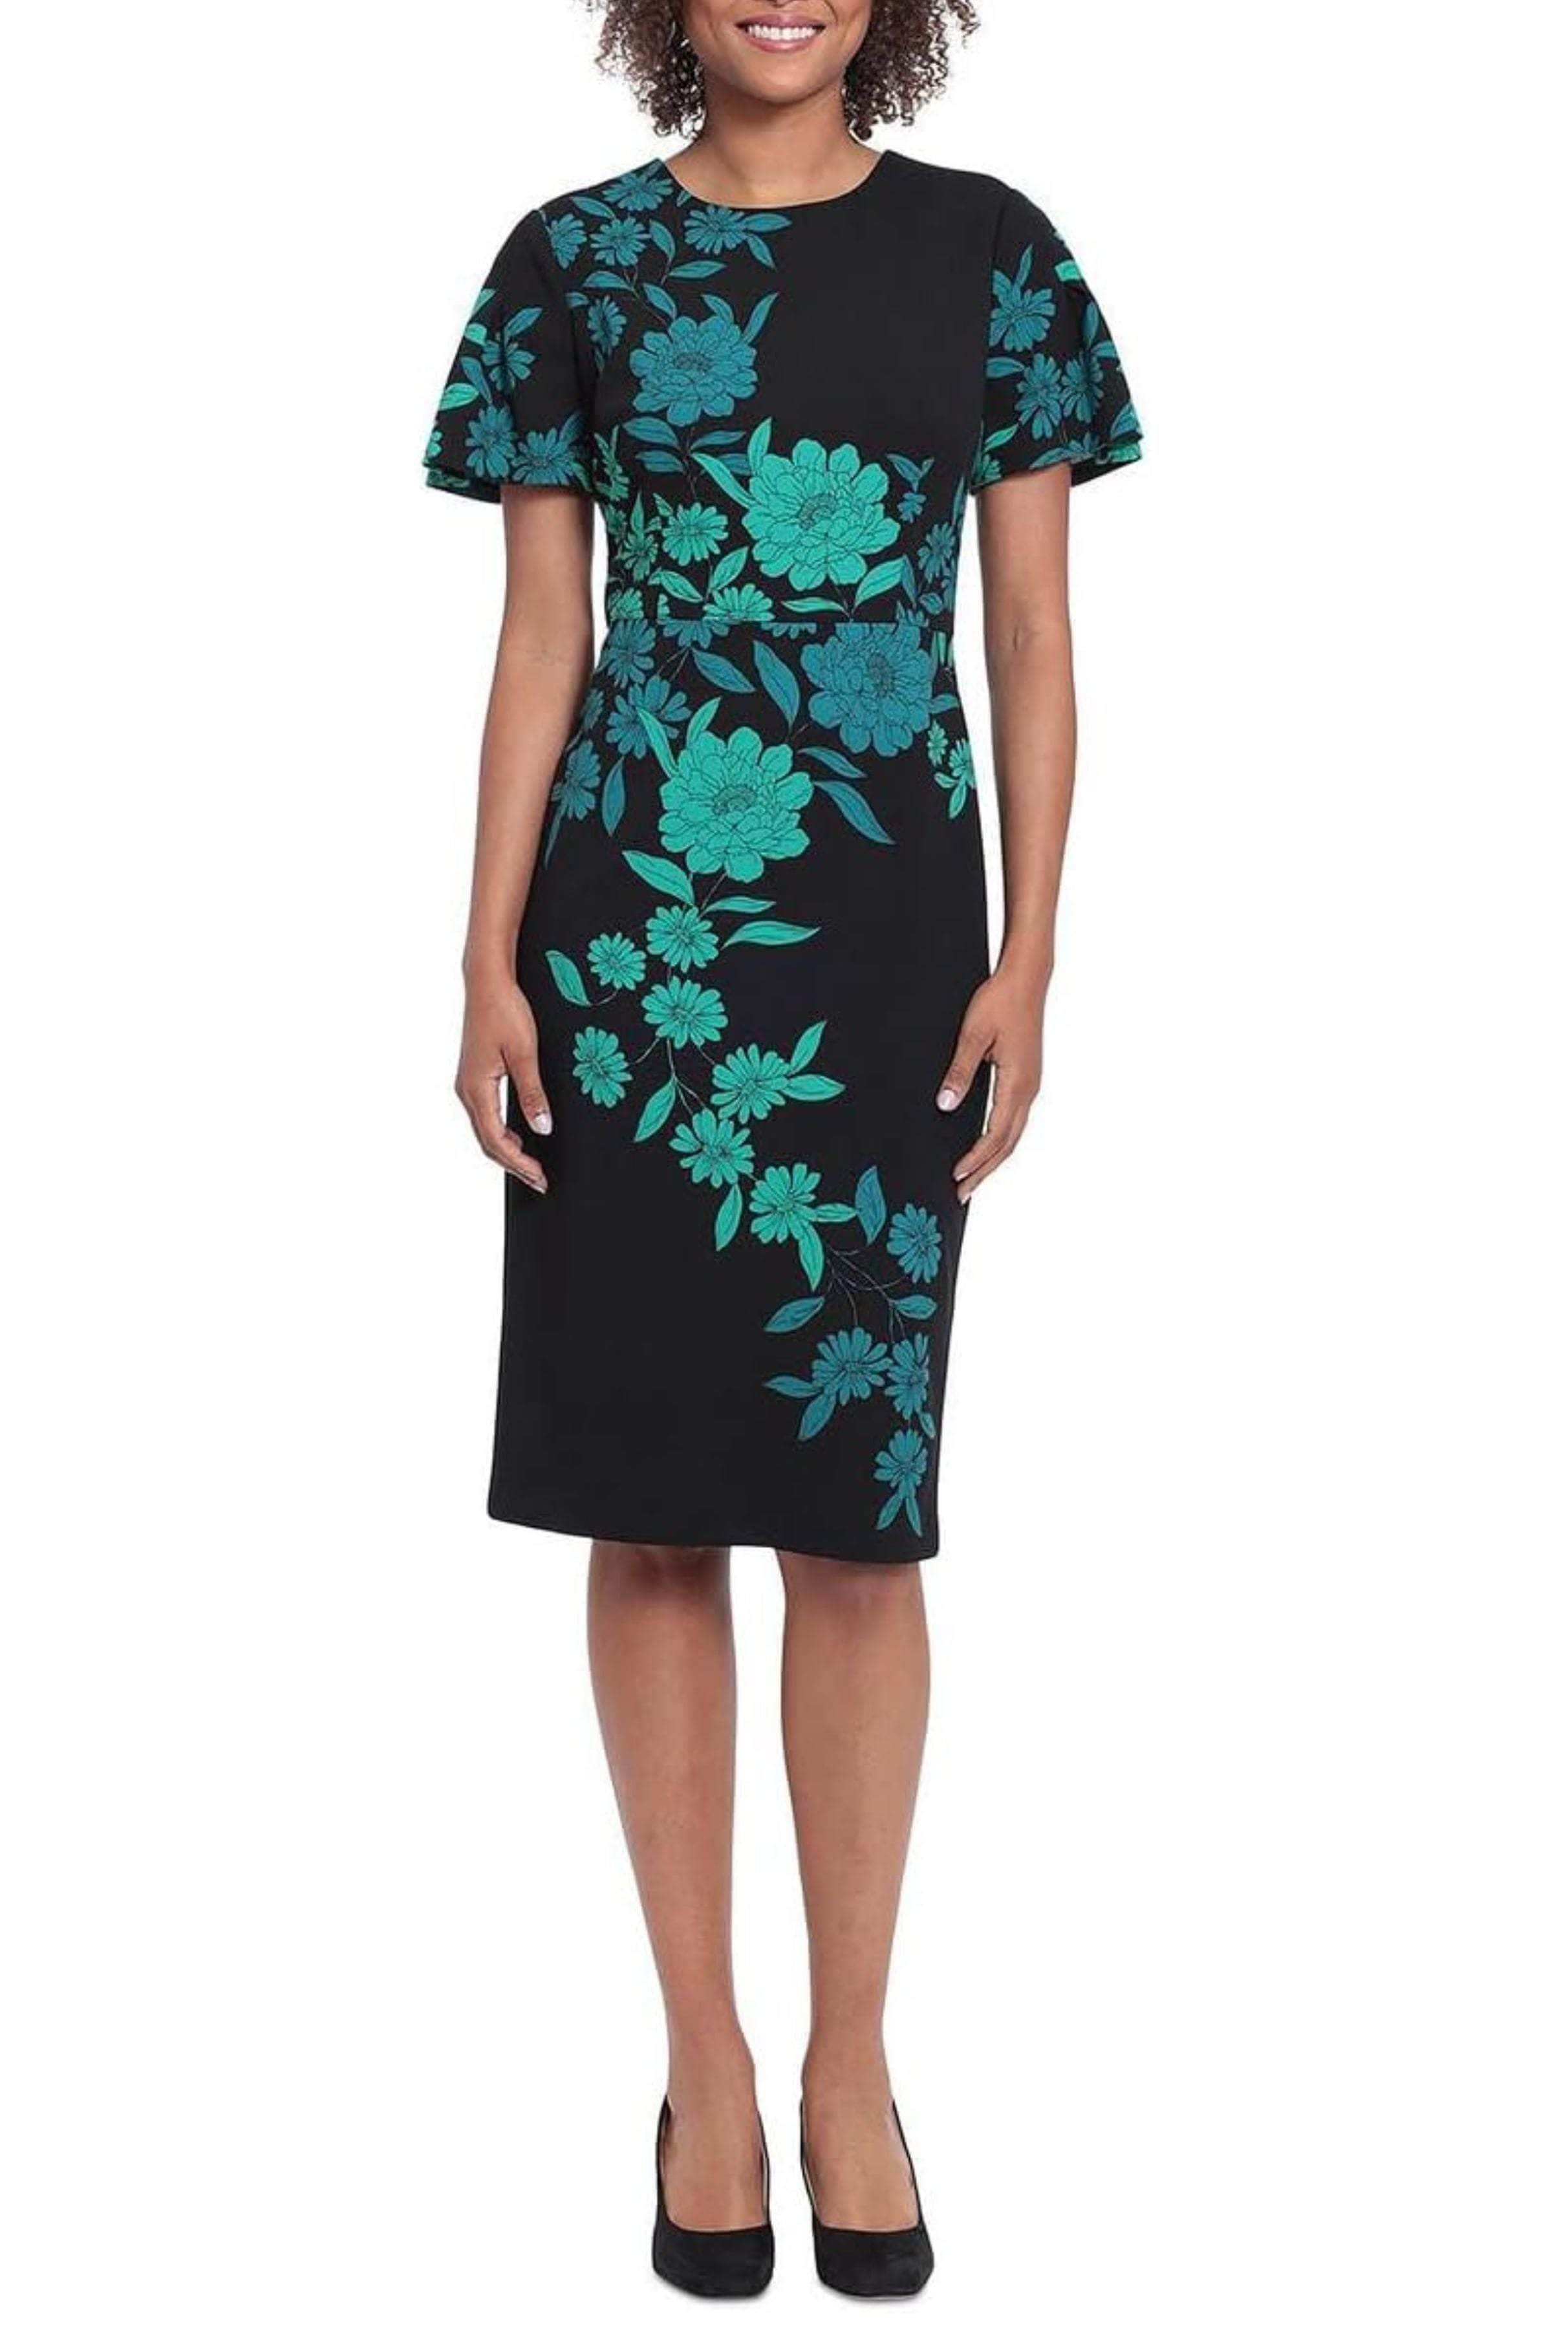 London Times T6384M - Jewel Neck Short Sleeve Formal Dress
